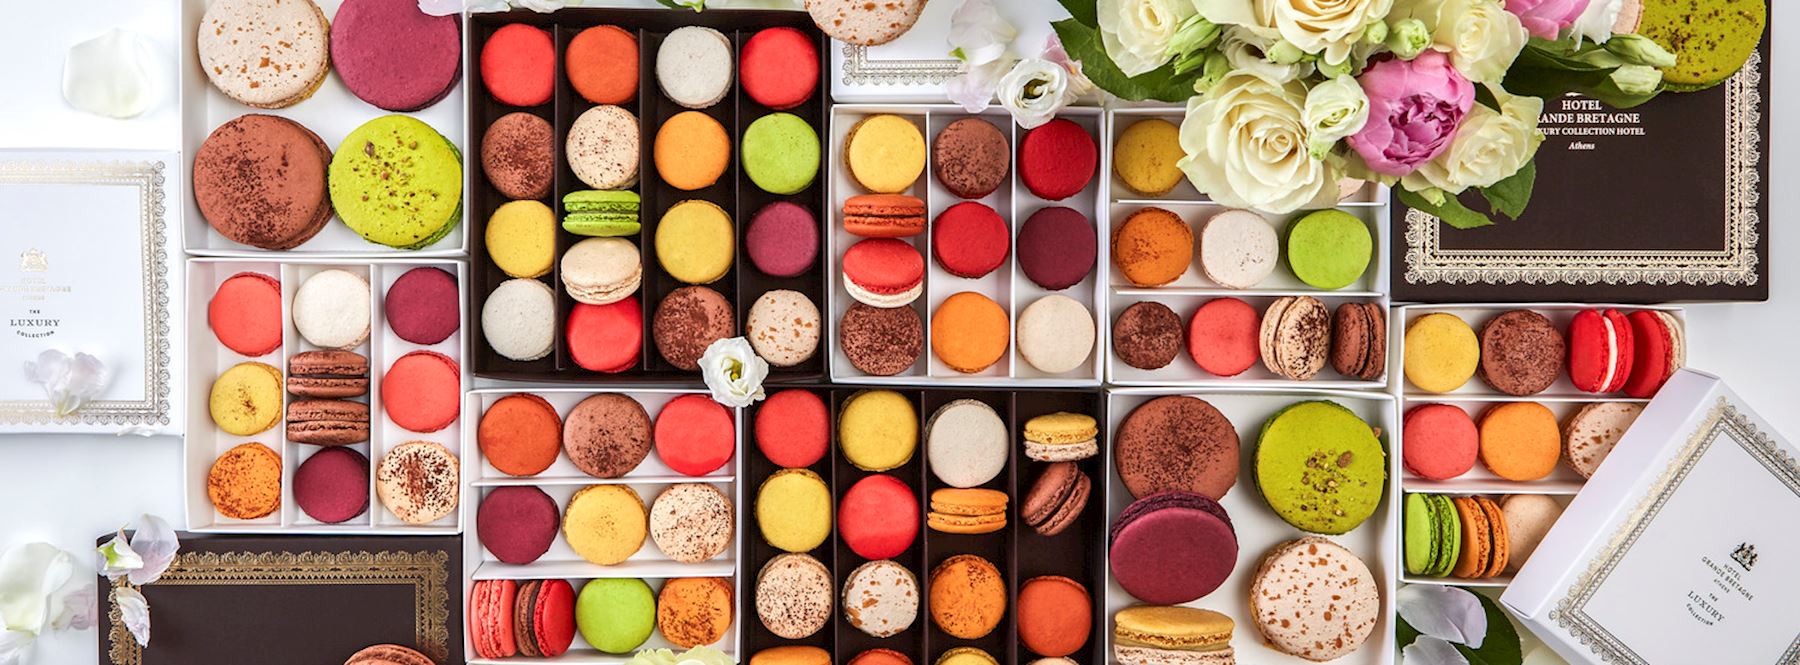 Macaron Flavors by Arnaud